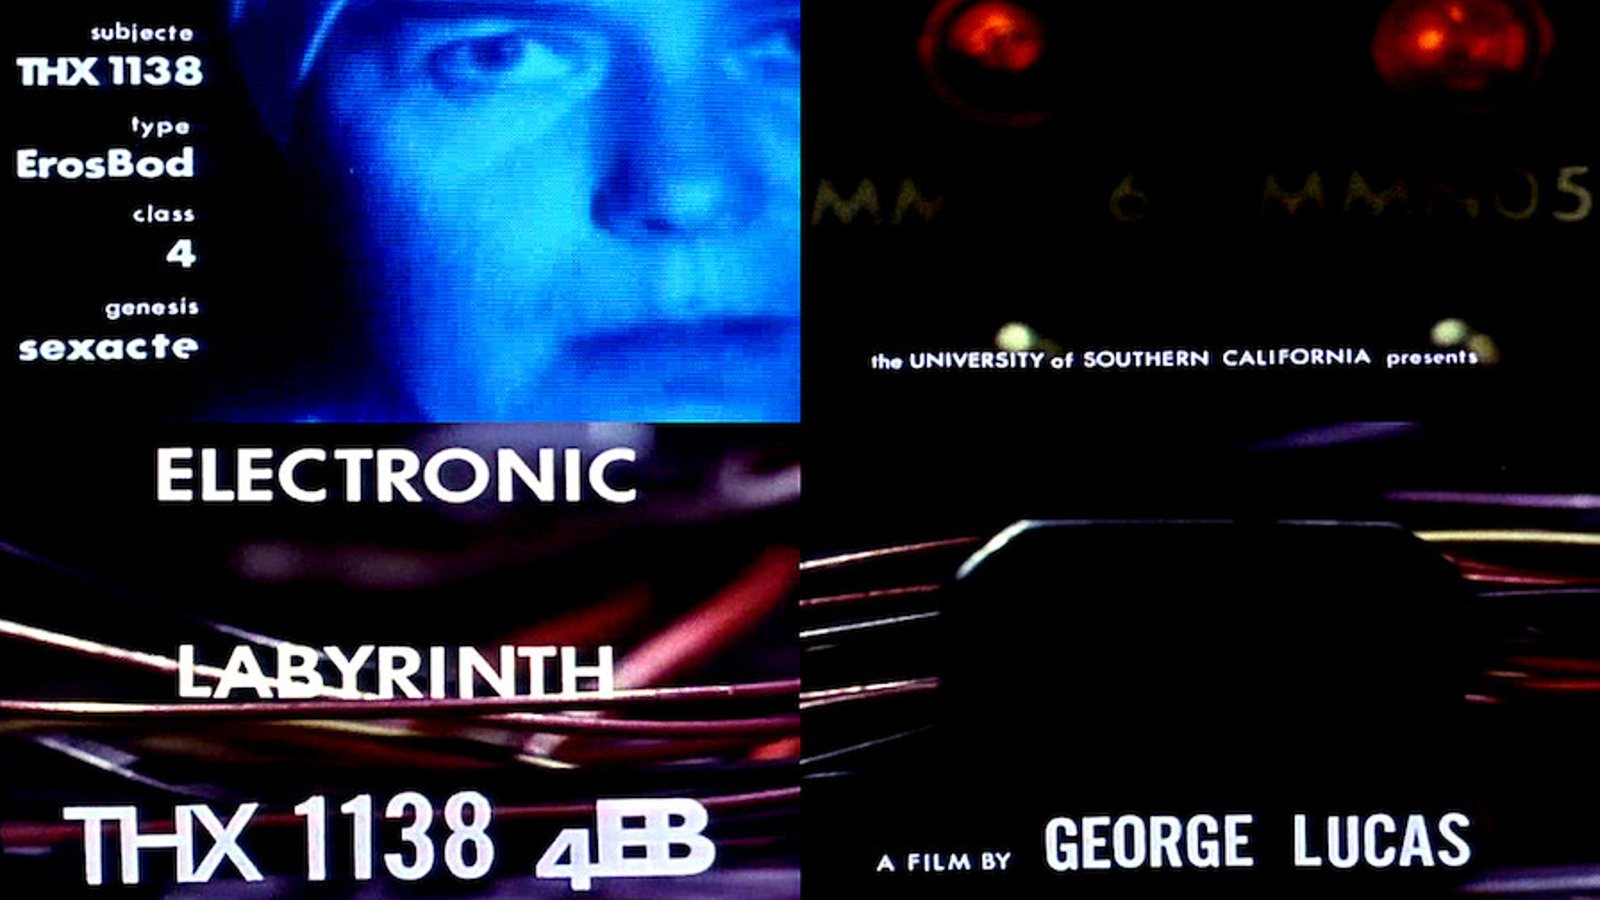 Electronic Labyrinth - THX 1138 4EB